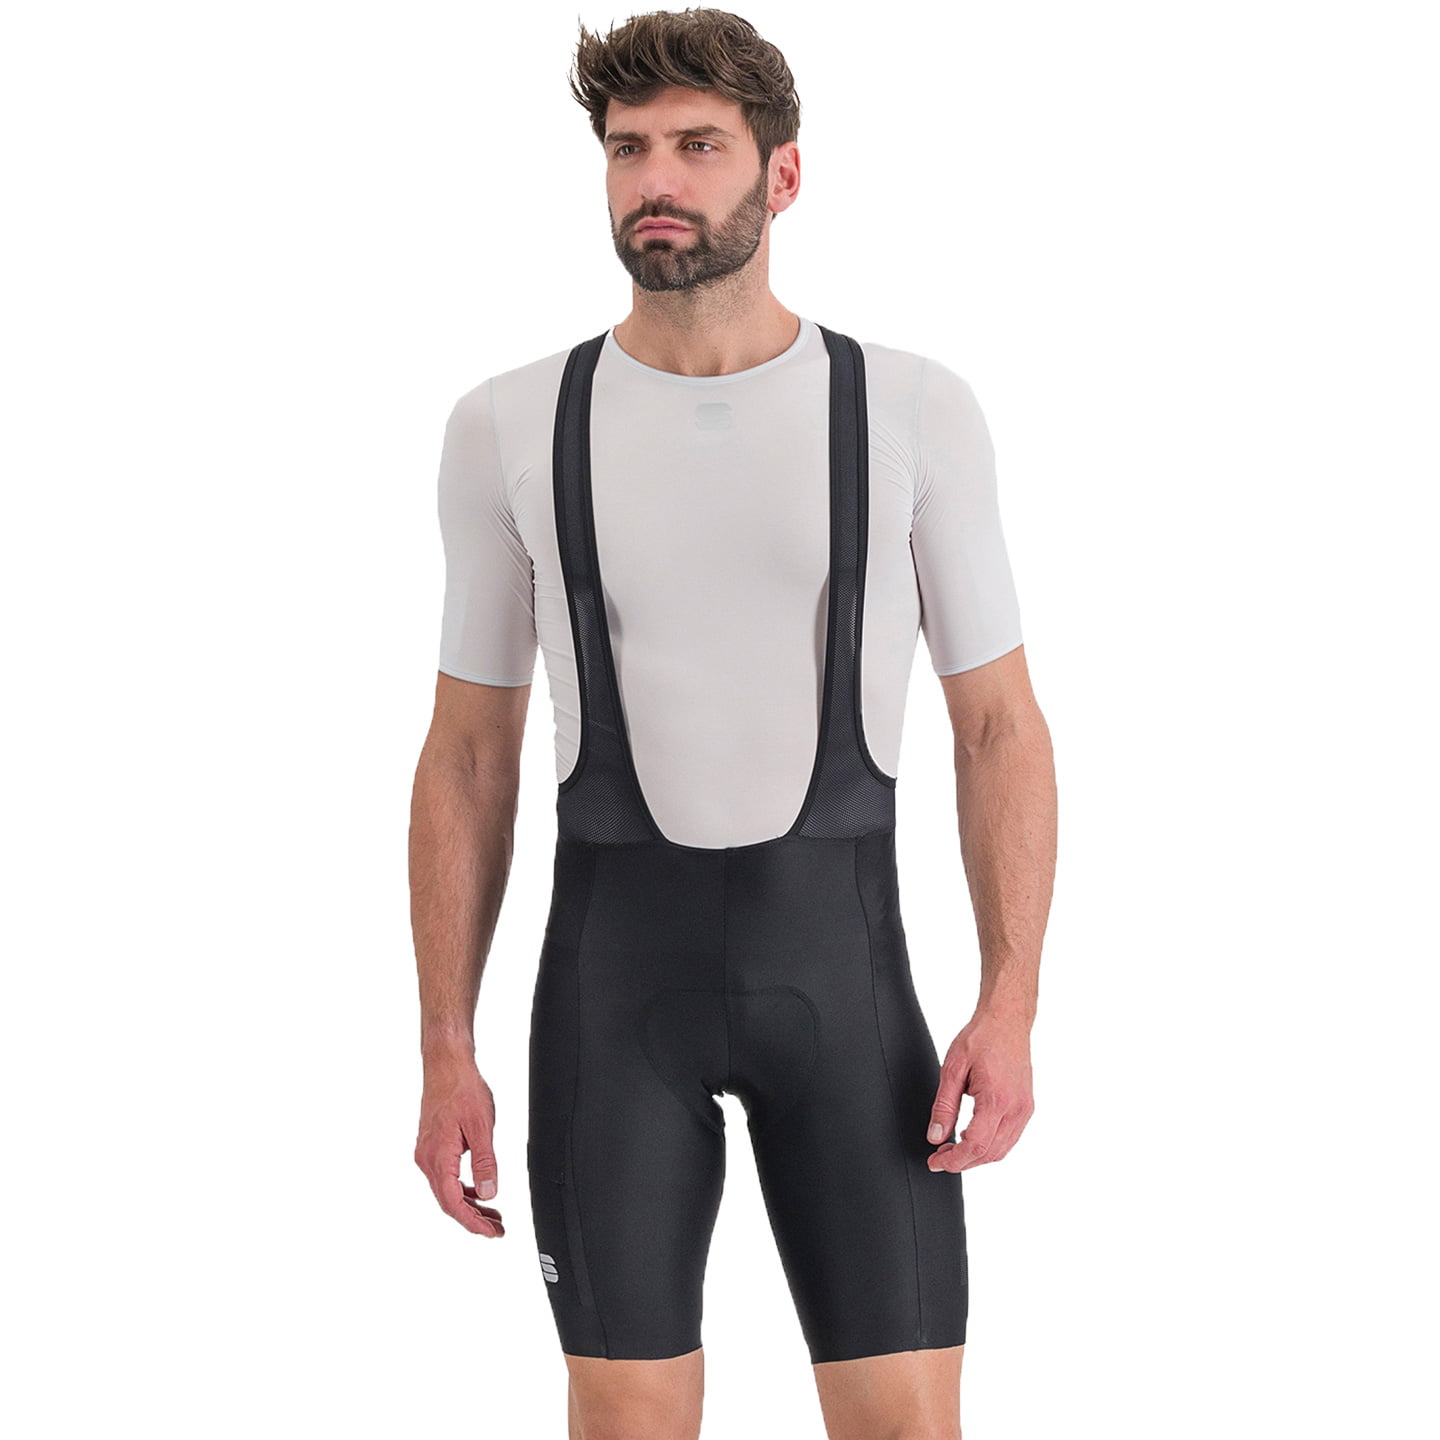 SPORTFUL Giara Bib Shorts Bib Shorts, for men, size M, Cycle shorts, Cycling clothing